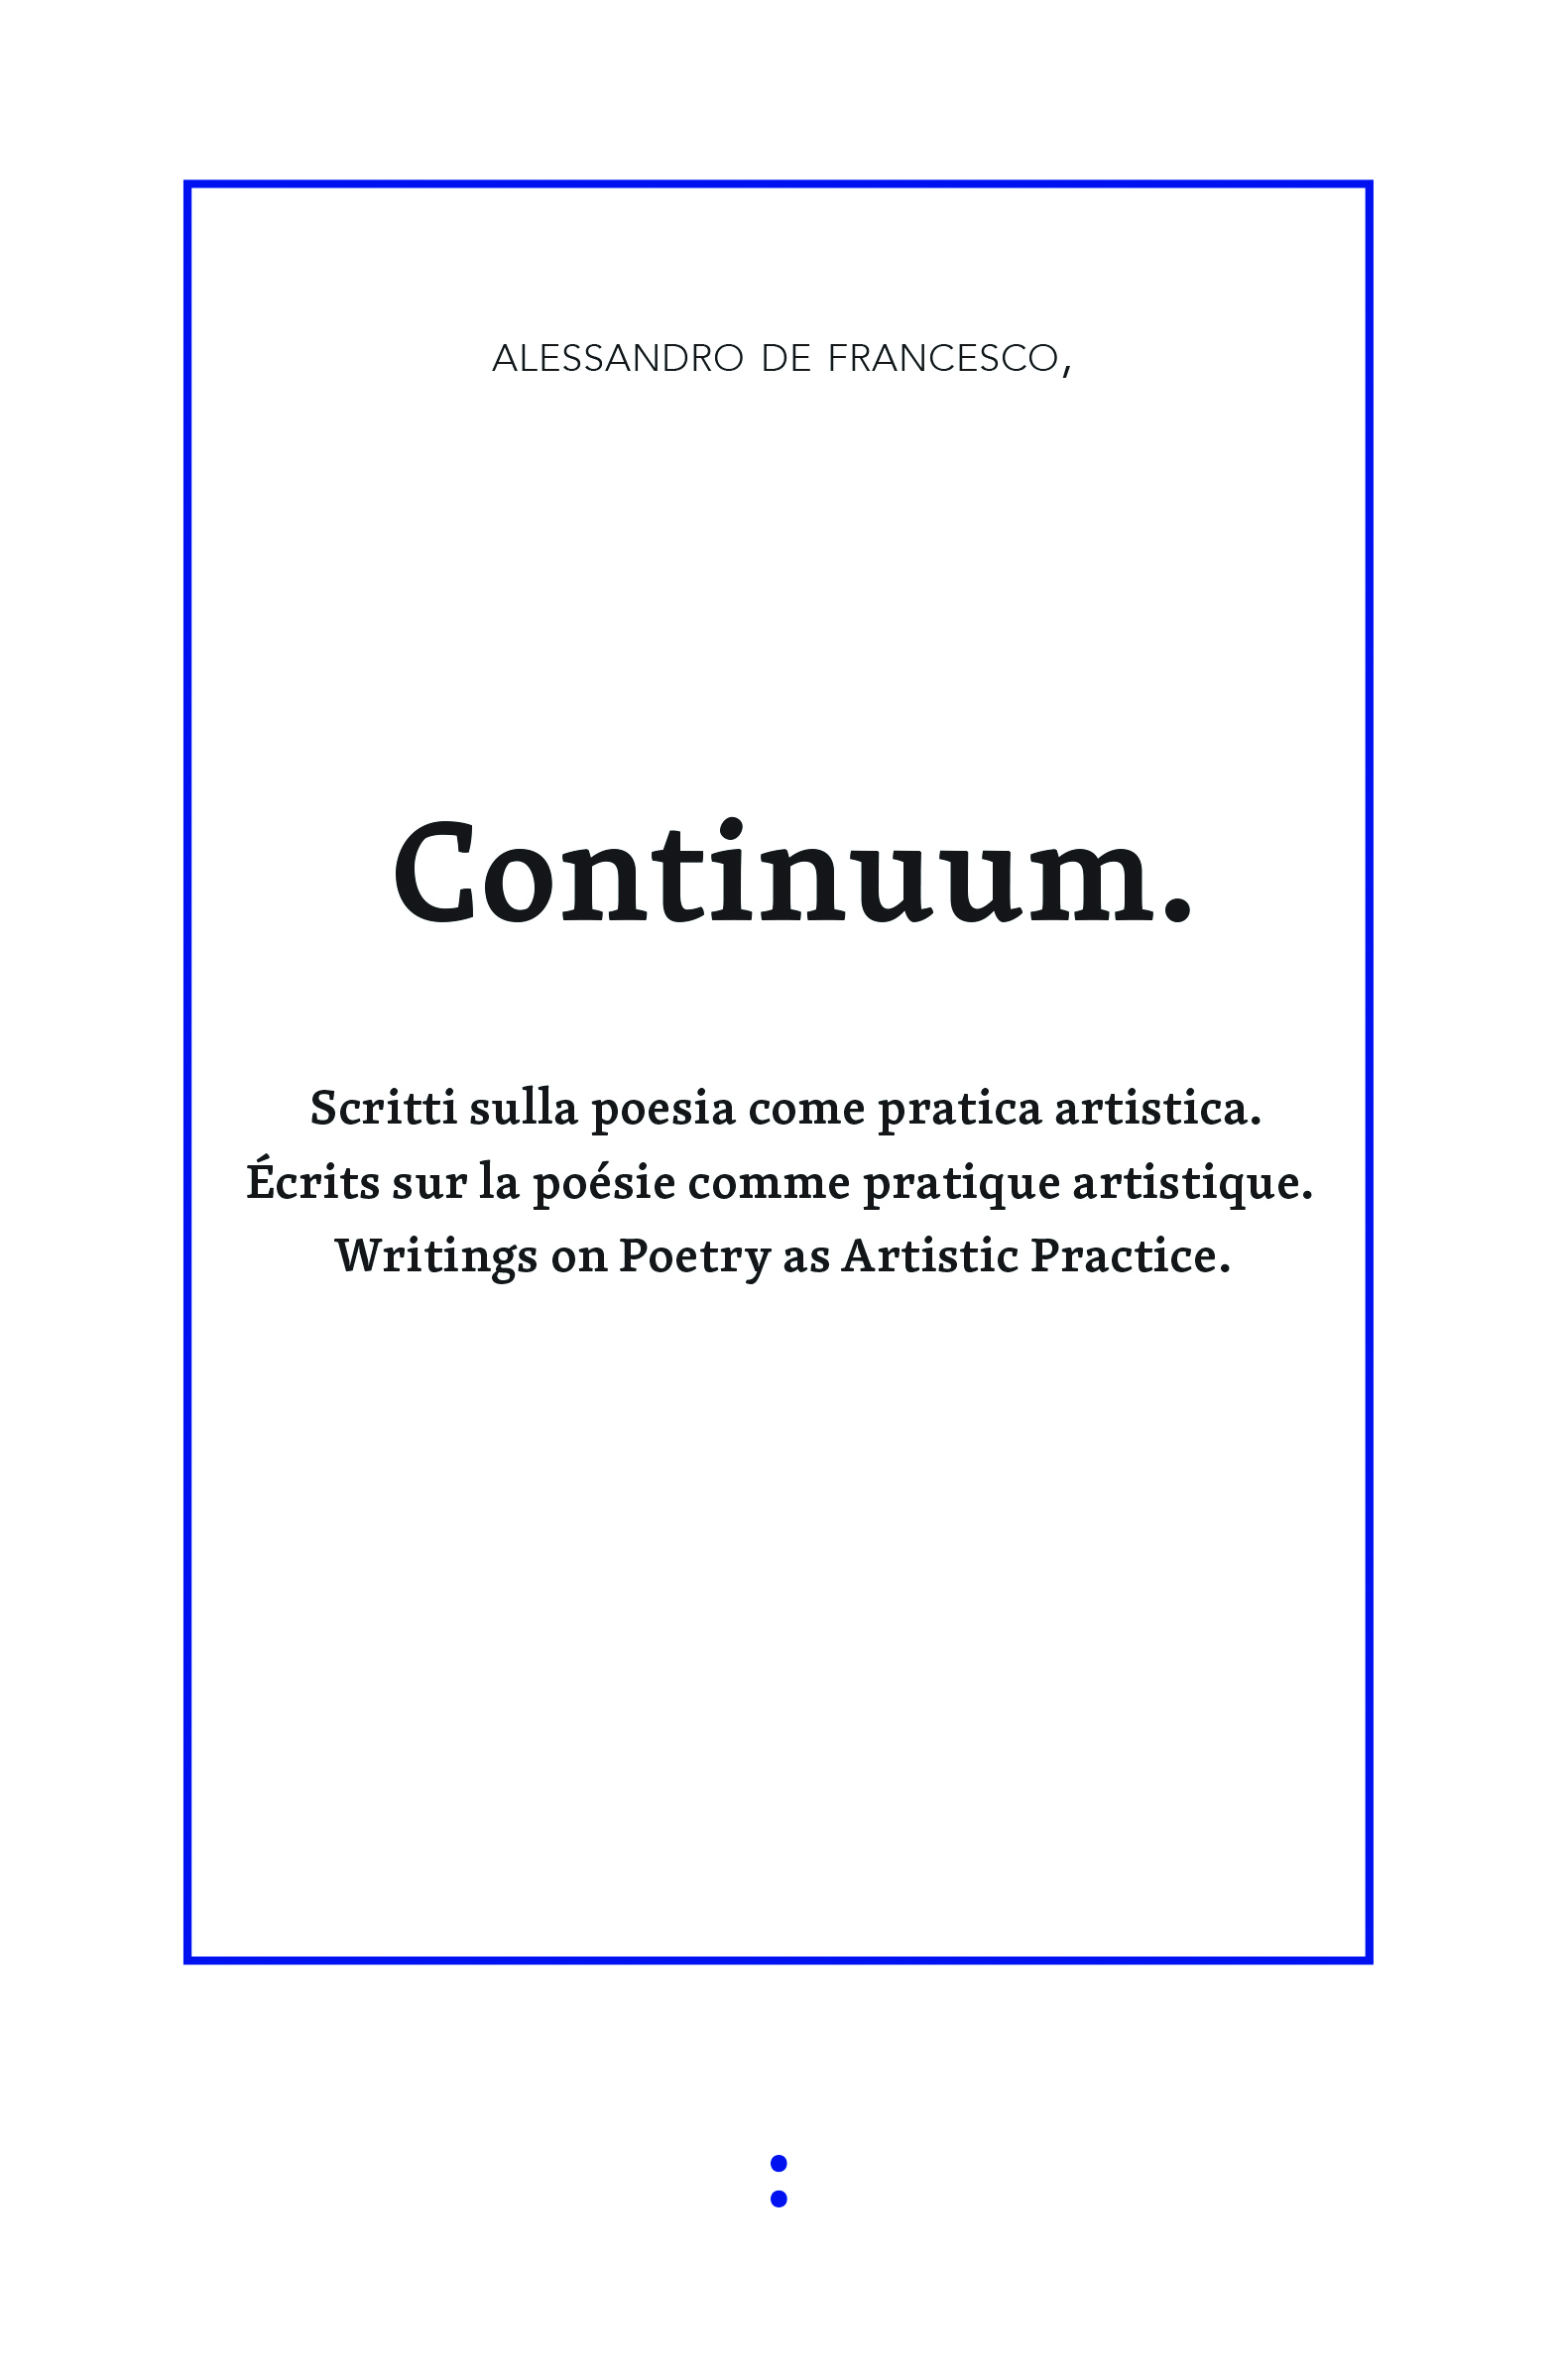 Continuum: Writings on Poetry as Artistic Practice (punctum books, 2015)